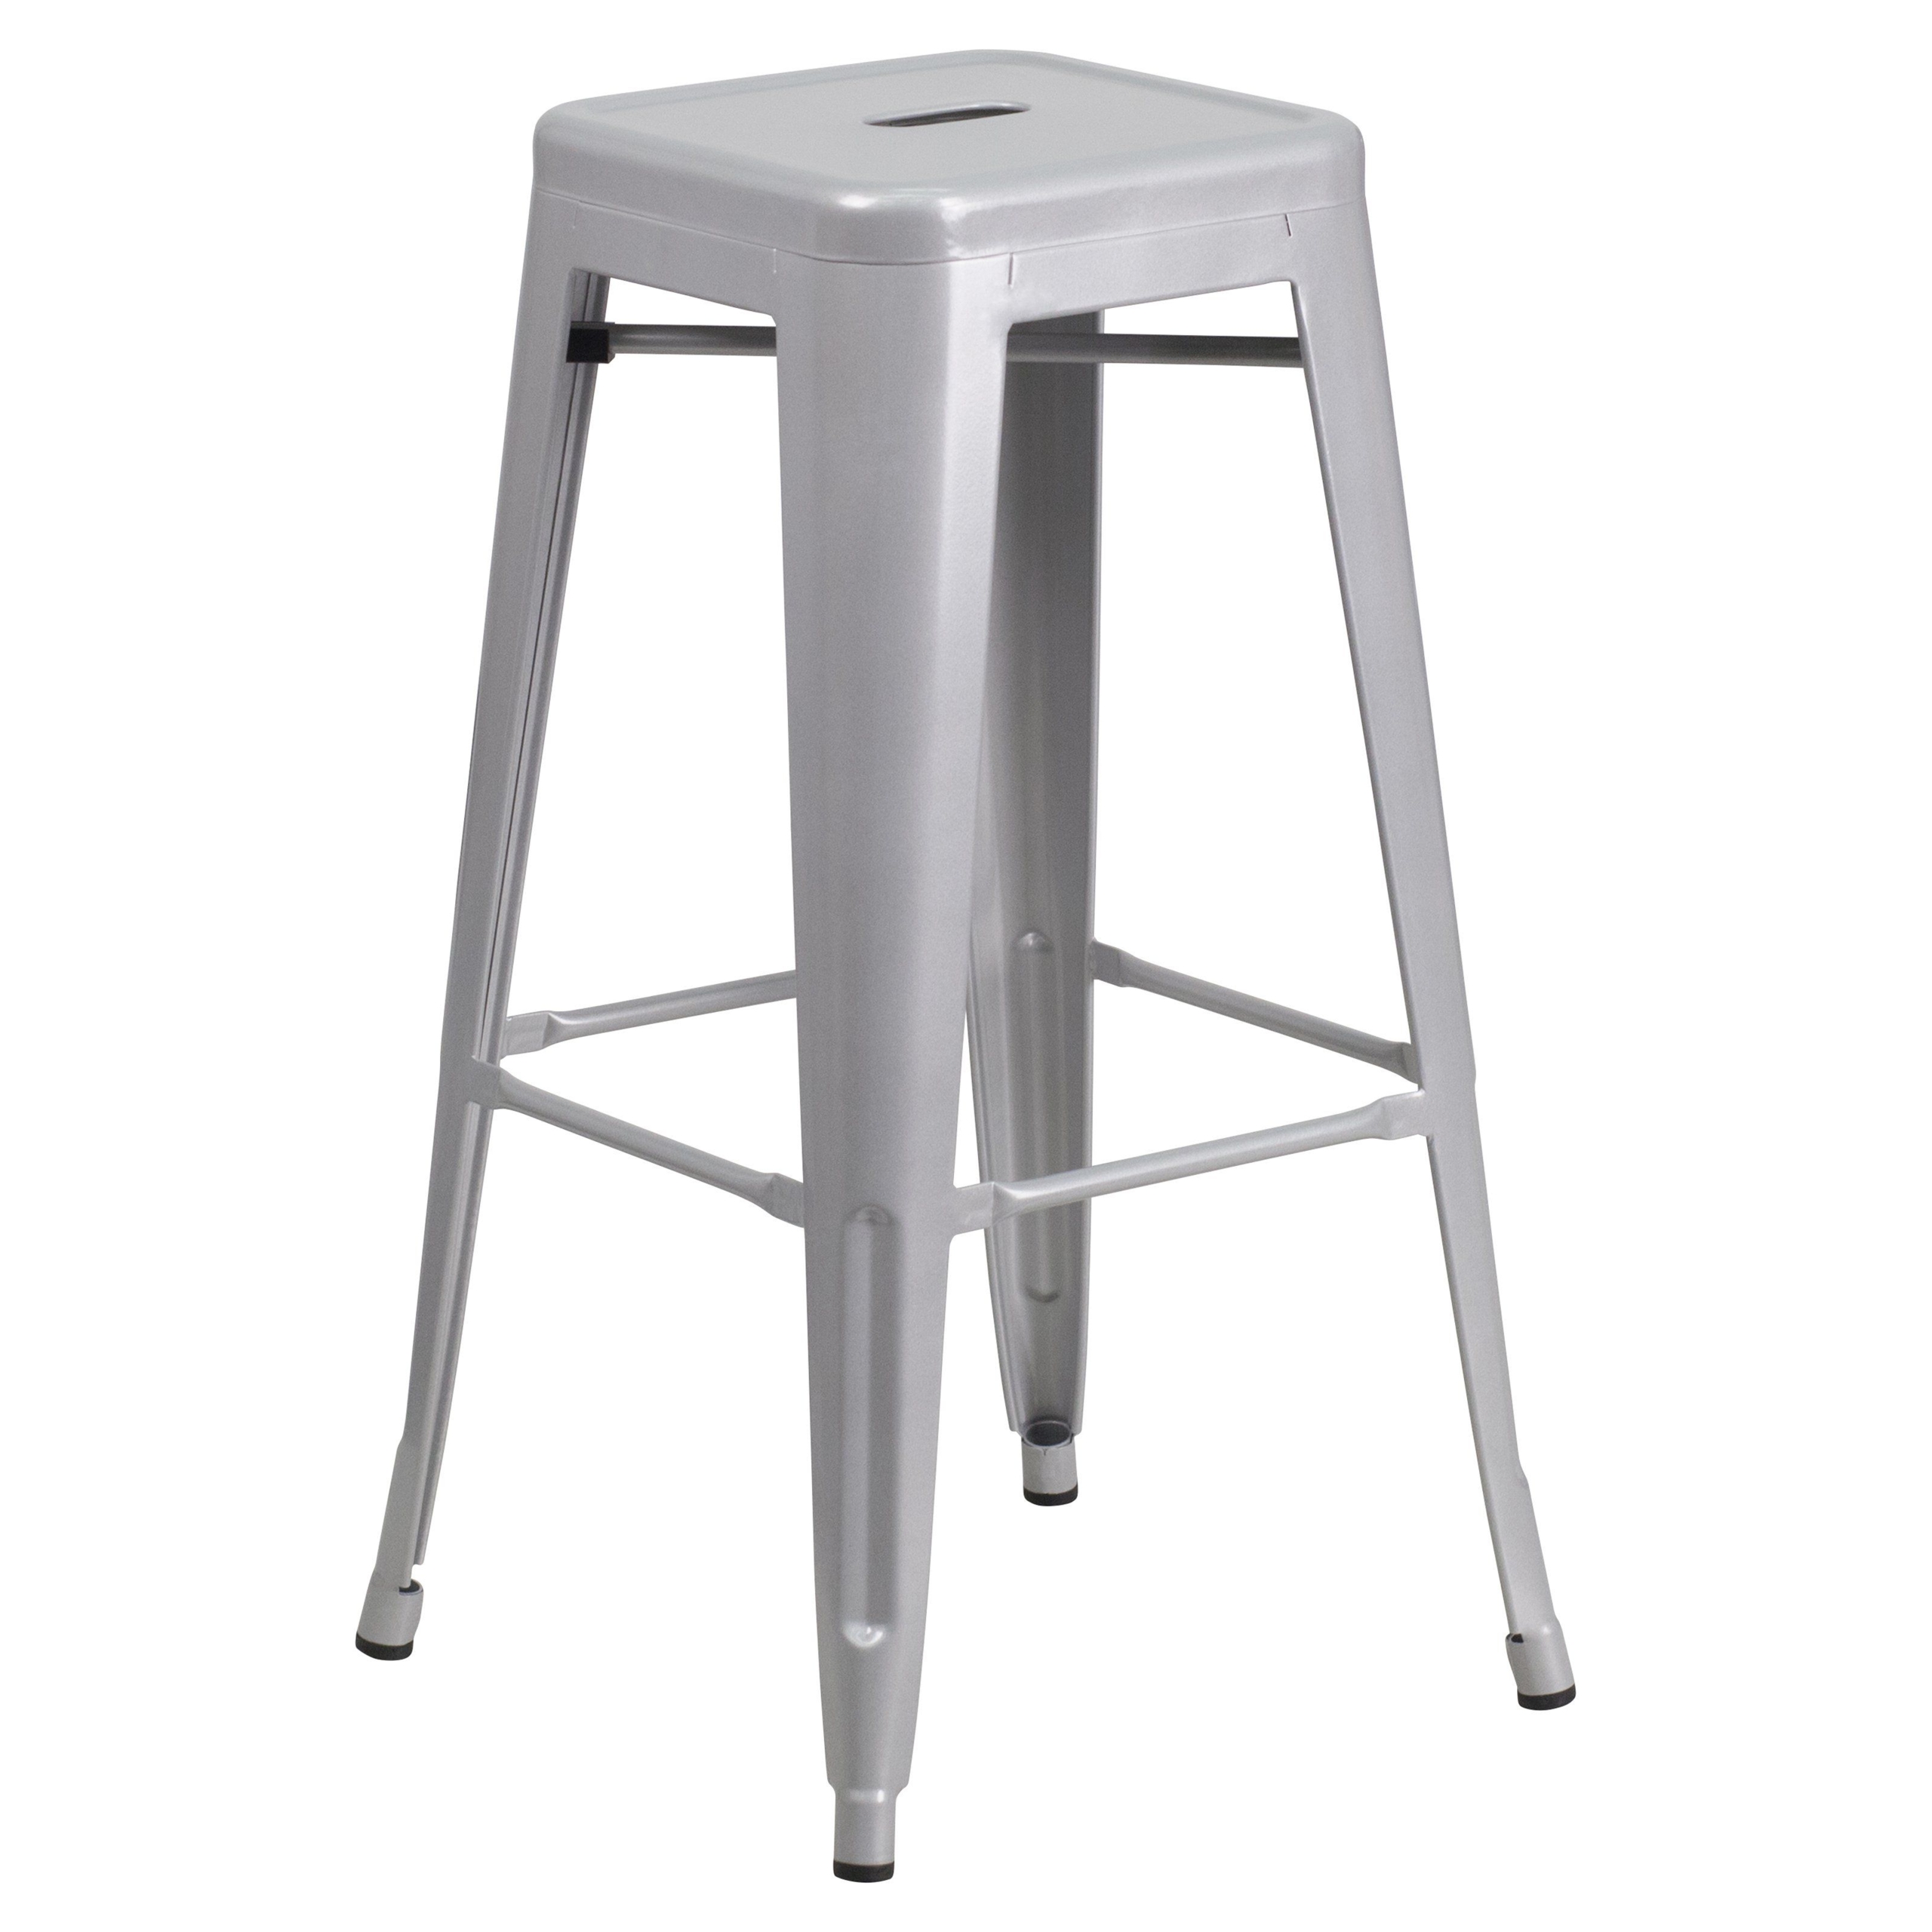 Silver metal bar stool chair square 12x12x30